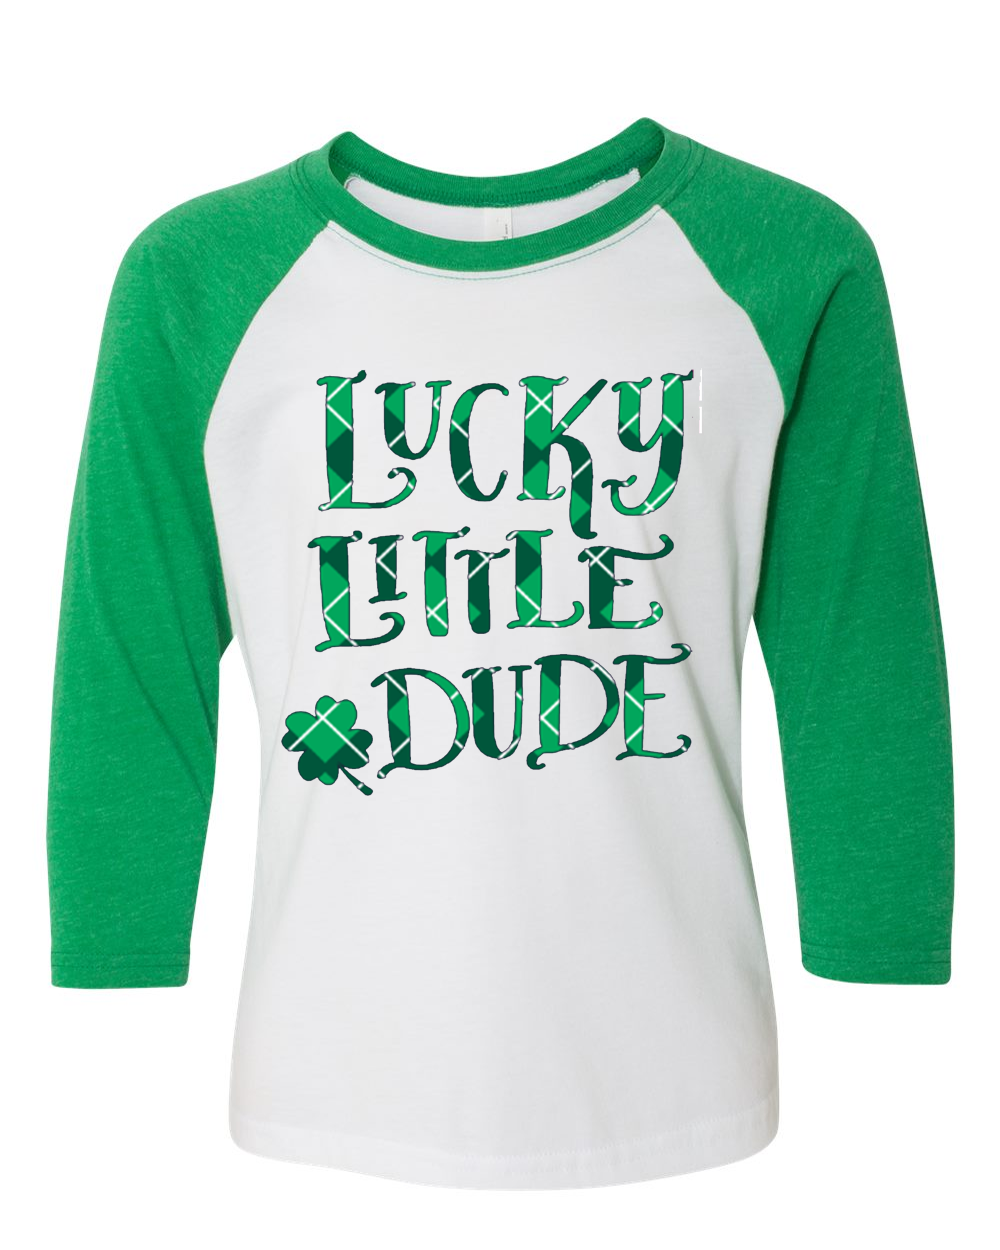 Youth Lucky Little Dude 3/4 Sleeve Shirt